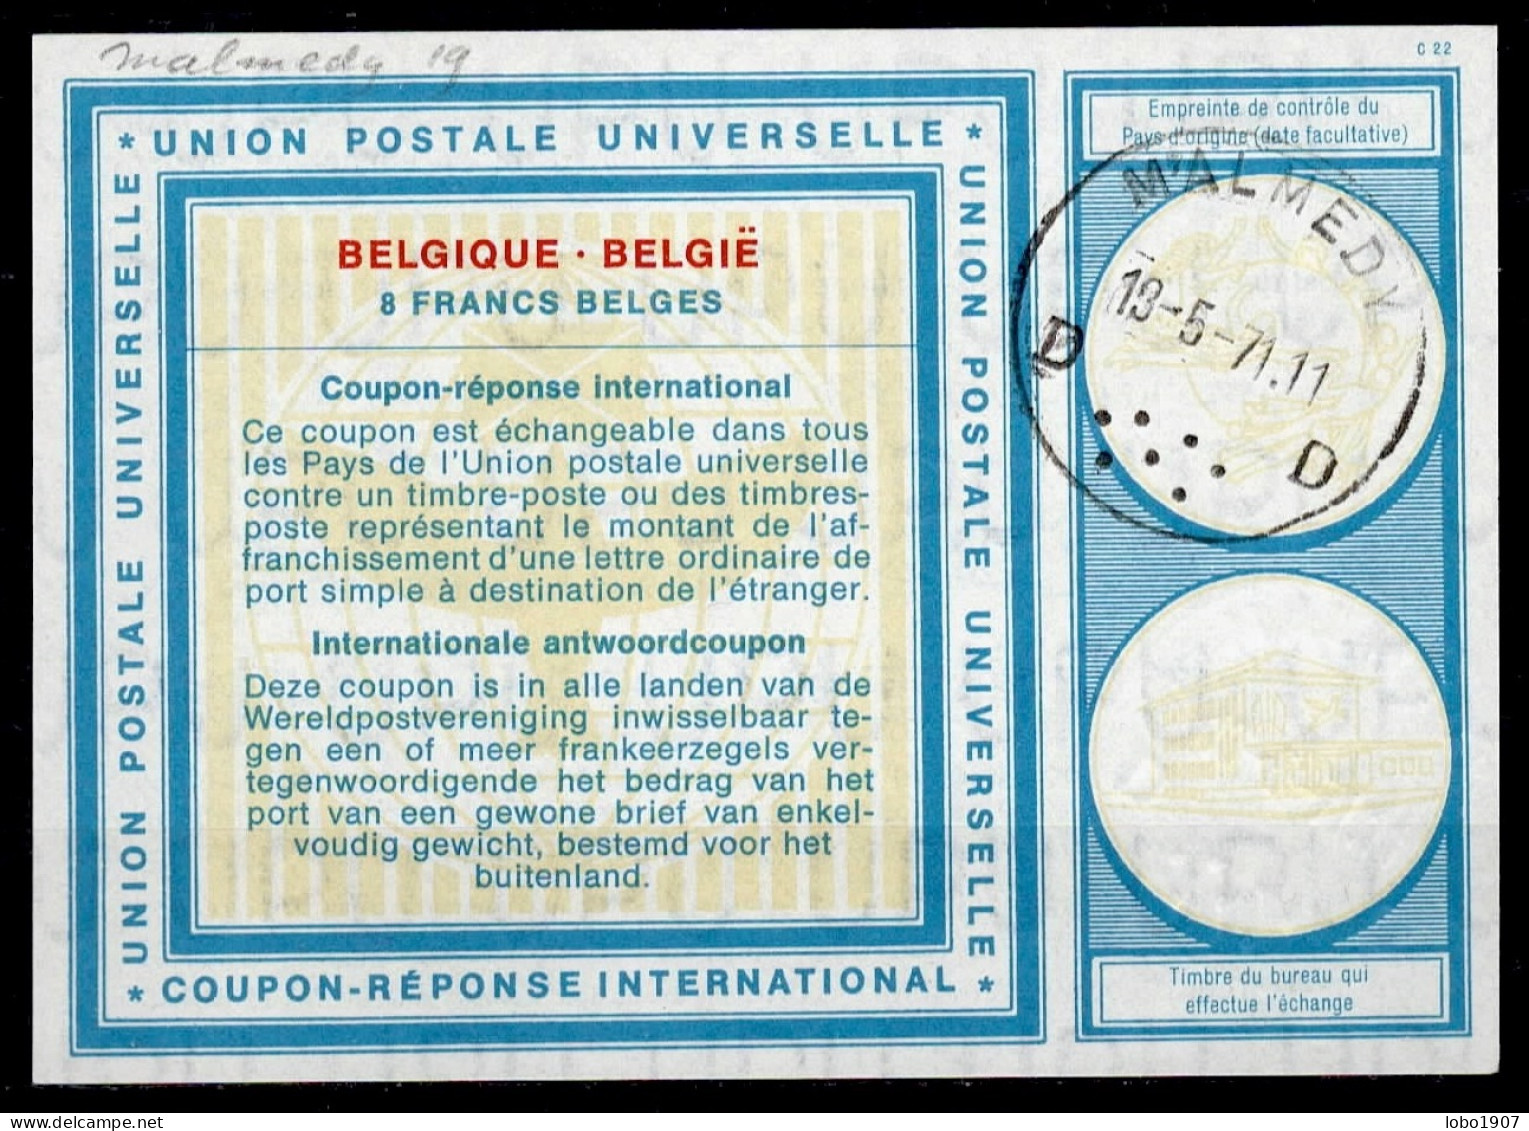 MALMEDY 13.05.71    BELGIQUE BELGIE BELGIUM  Vi19  8 FRANCS BELGES Int. Reply Coupon Reponse Antwortschein IAS IRC - Cupón-respuesta Internacionales